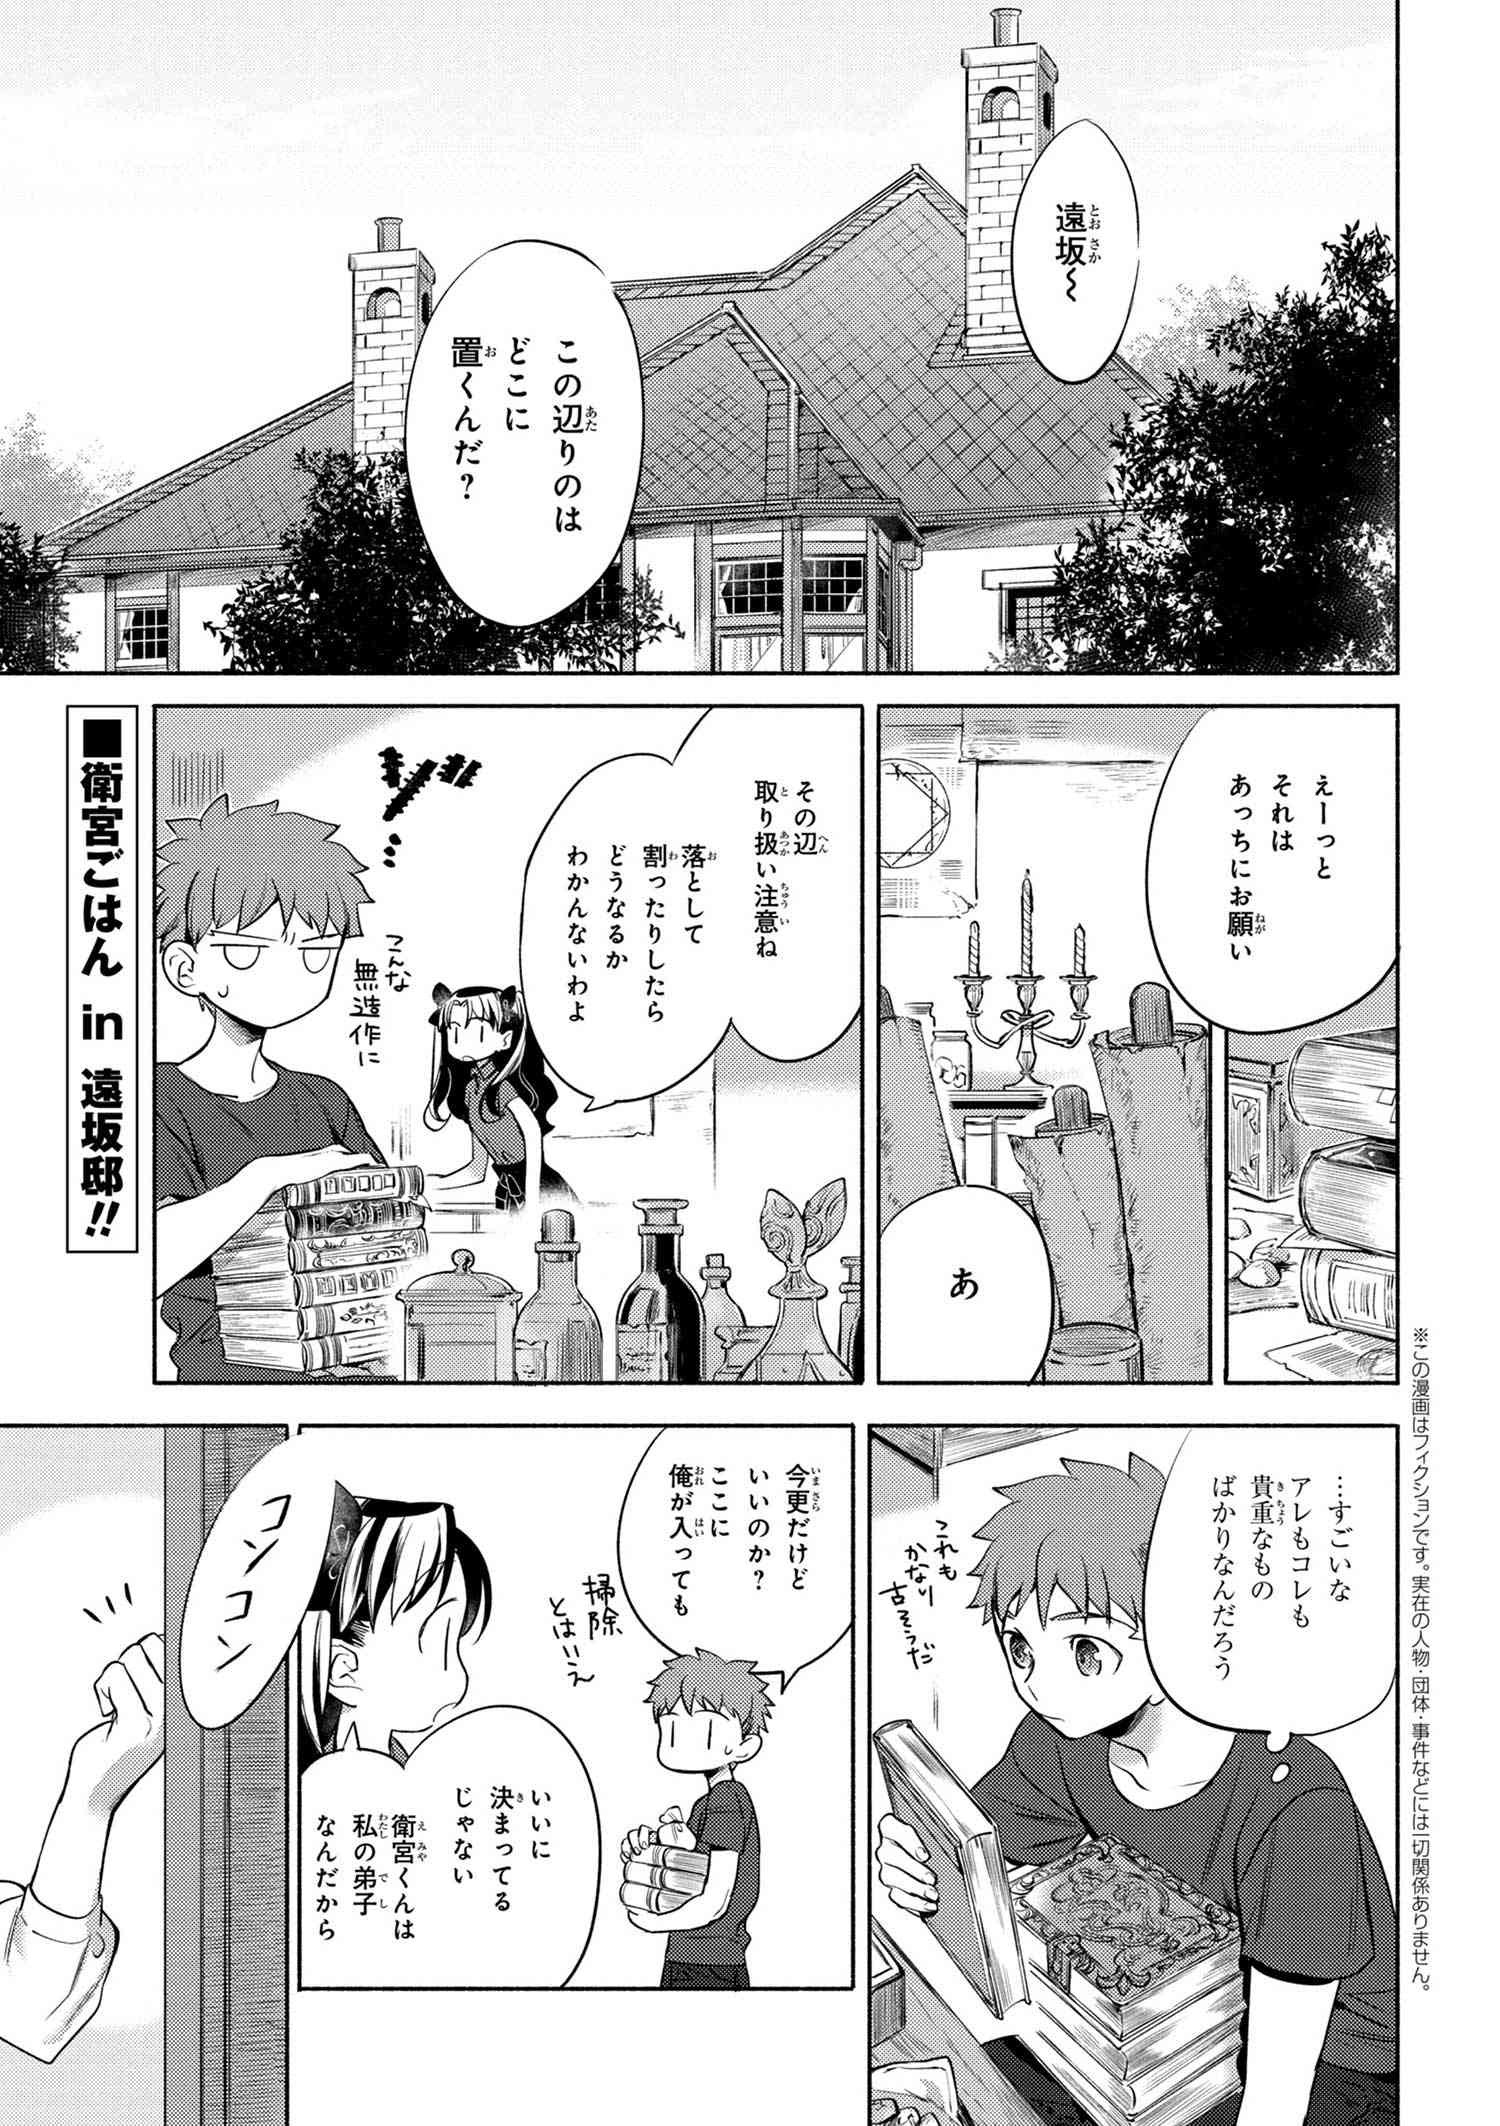 Emiya-san Chi no Kyou no Gohan - Chapter 8 - Page 1